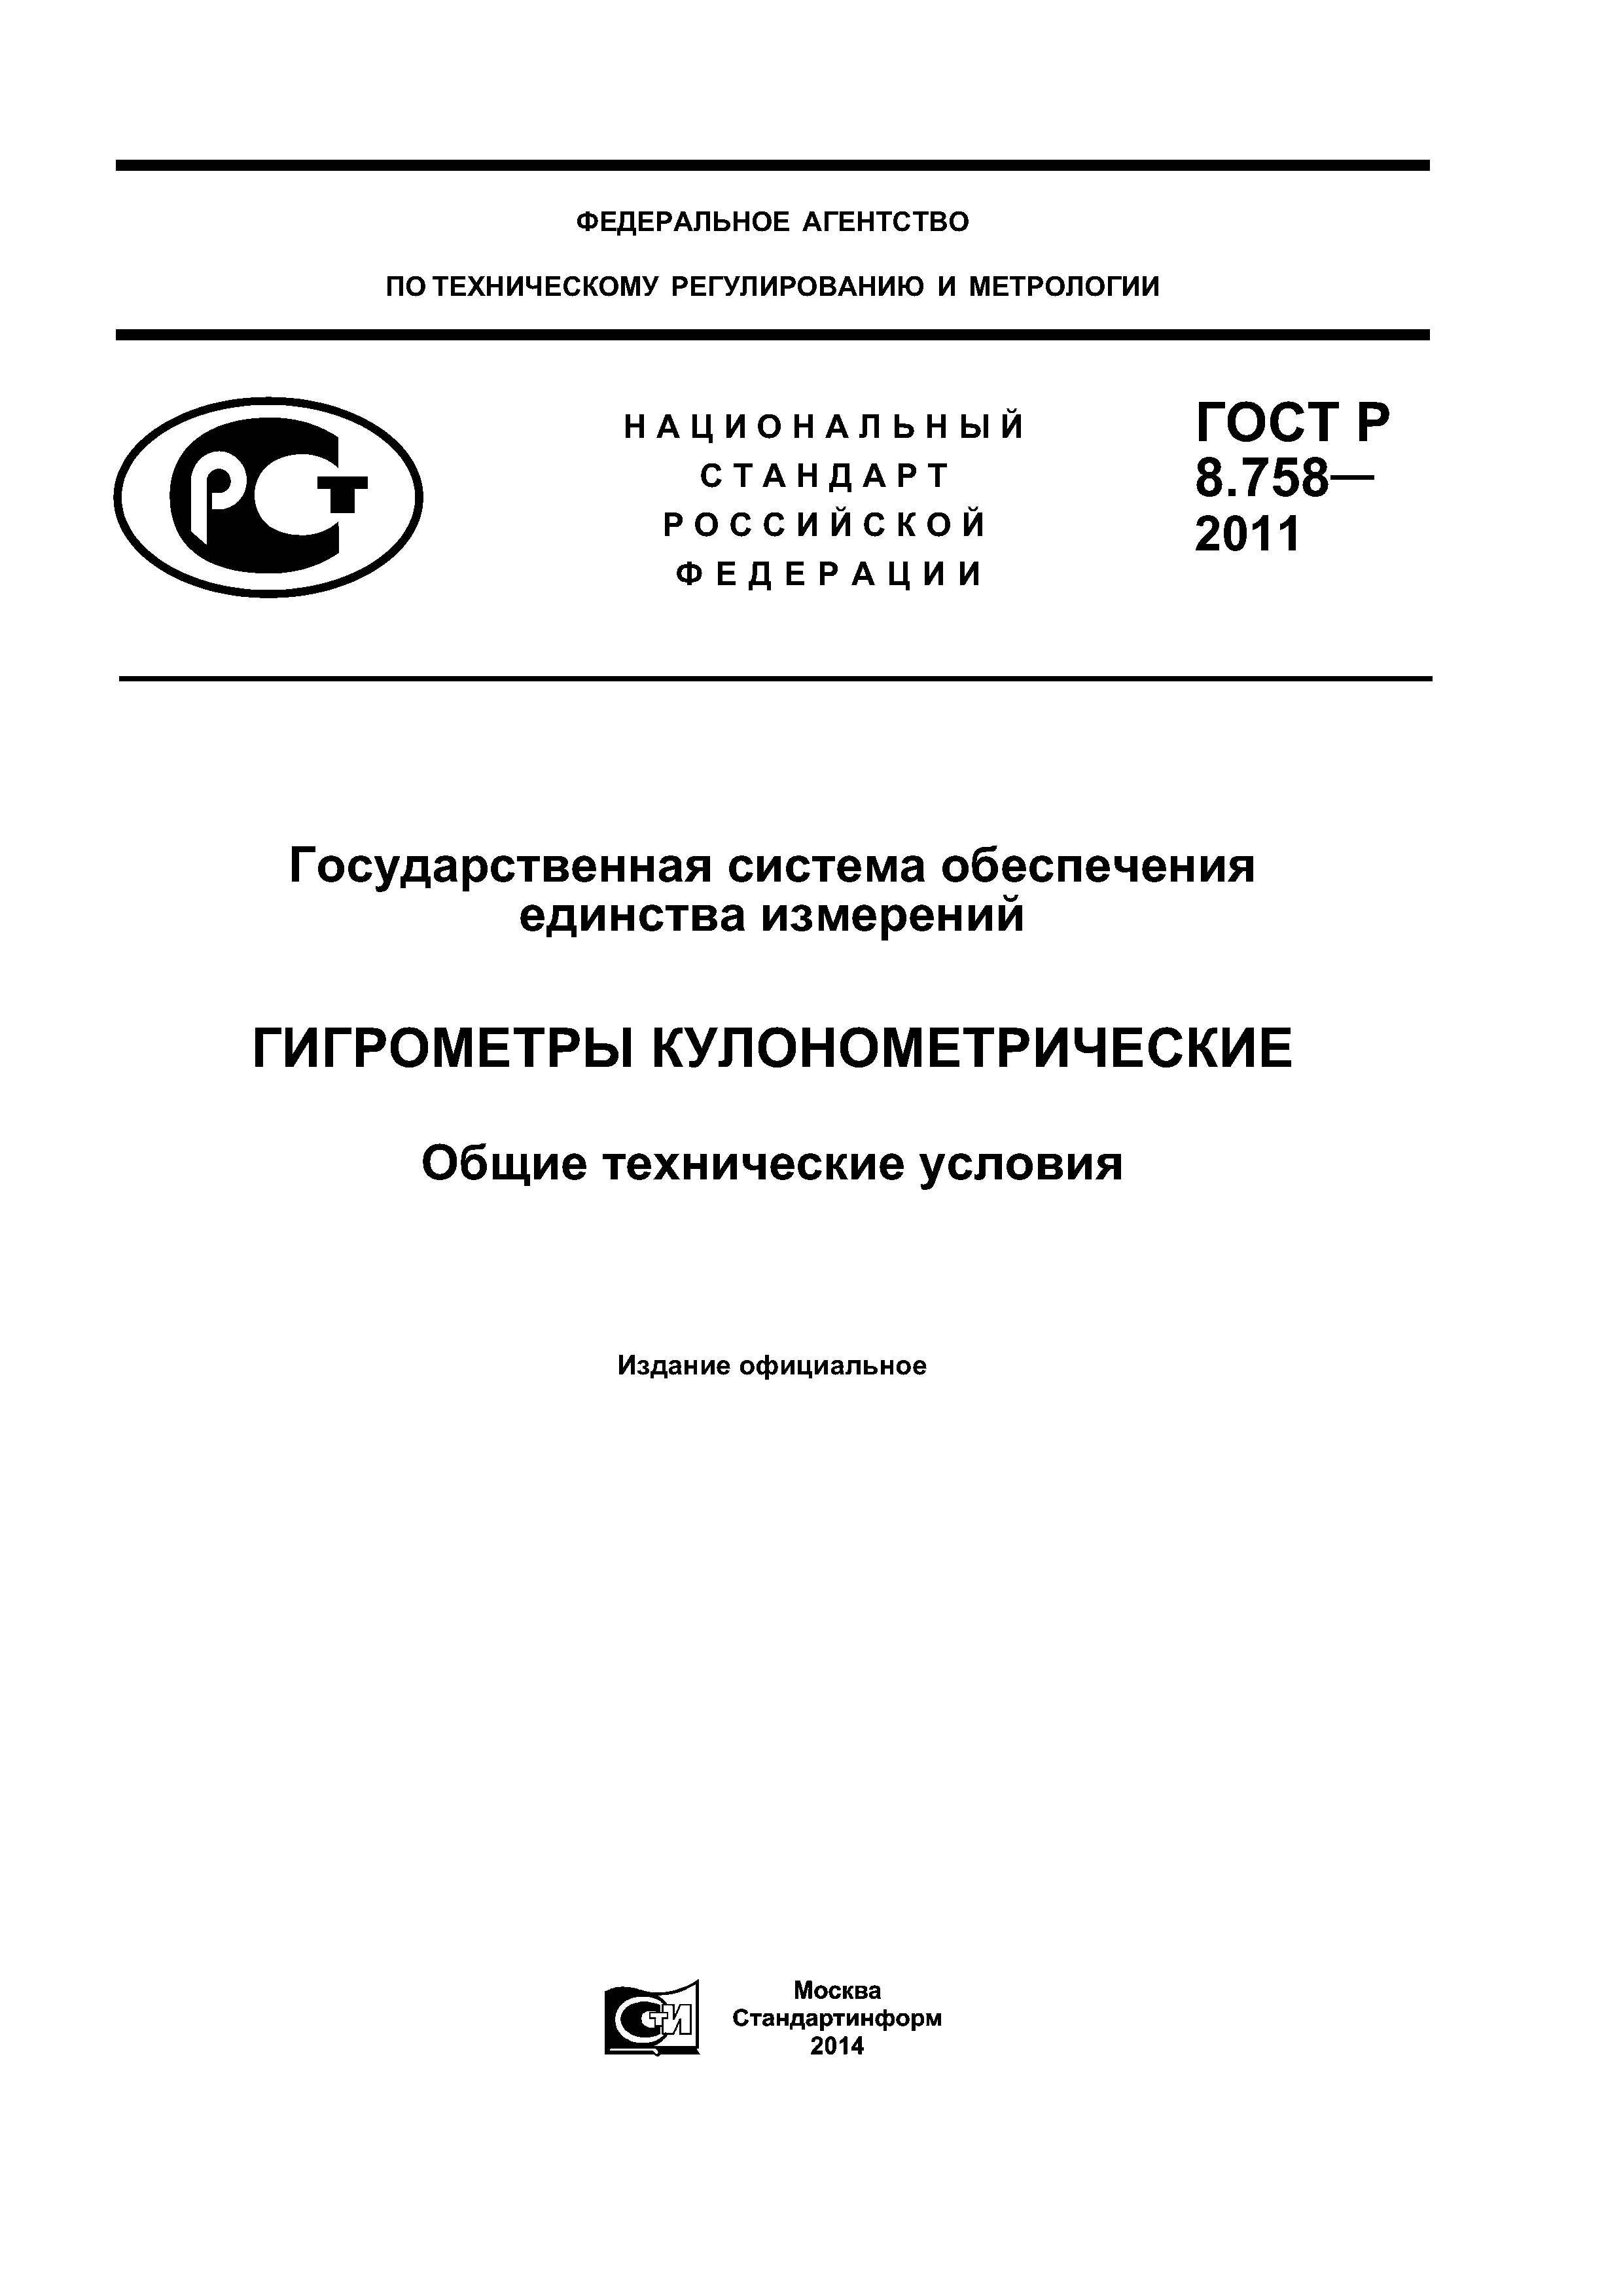 ГОСТ Р 8.758-2011